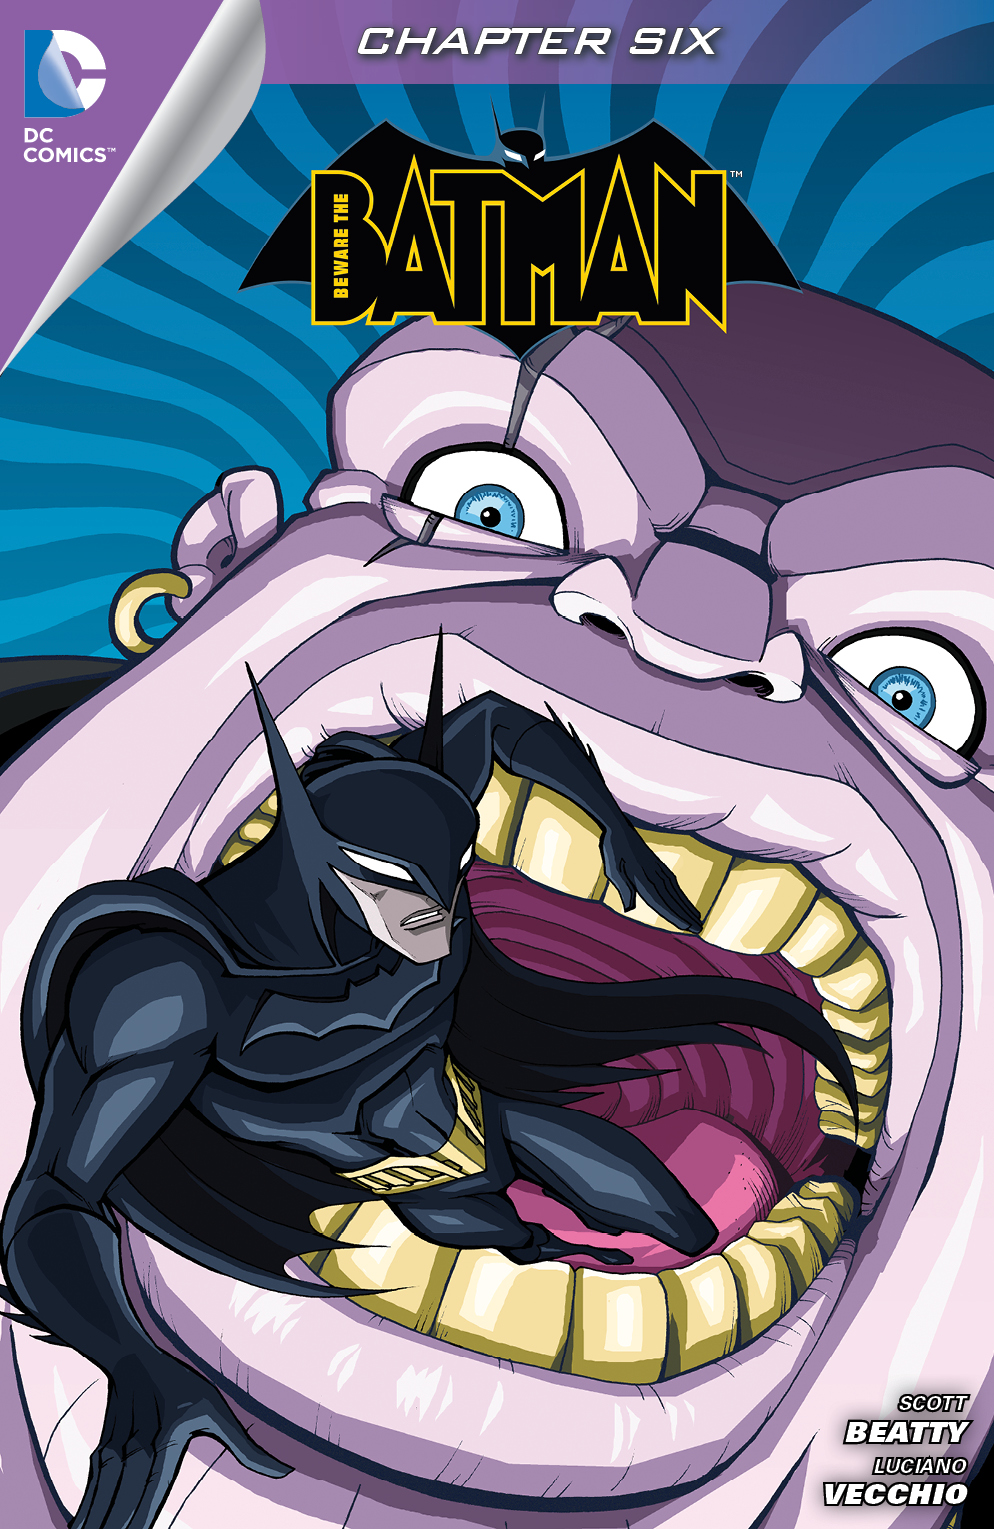 Beware The Batman #6 preview images